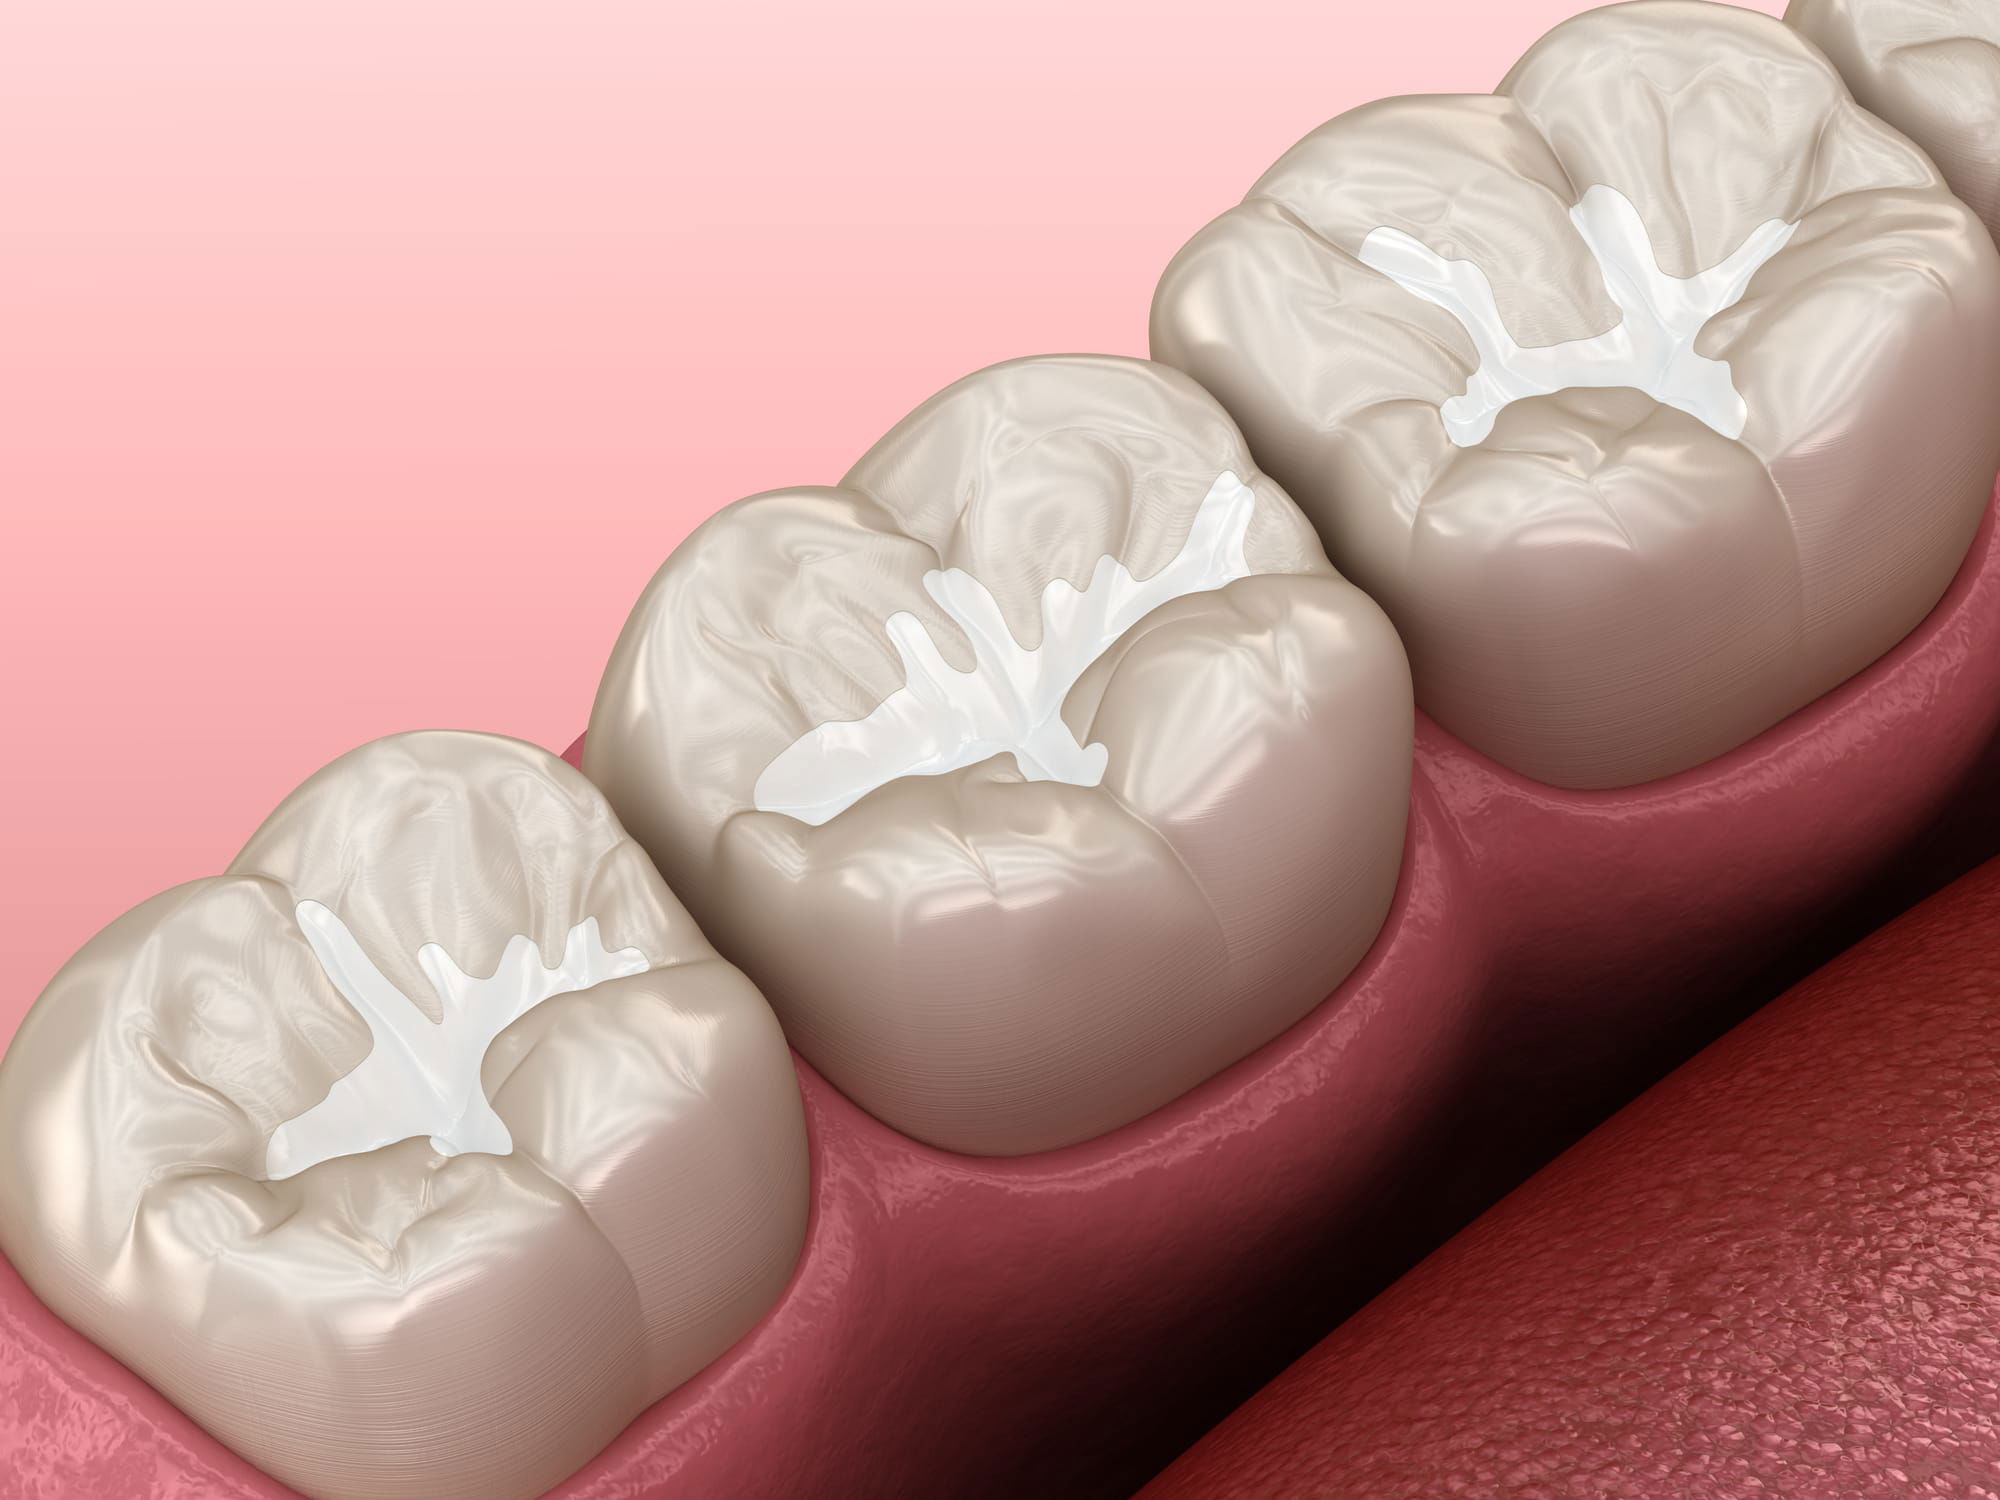 Dental Sealants: Shielding Children’s Teeth from Decay